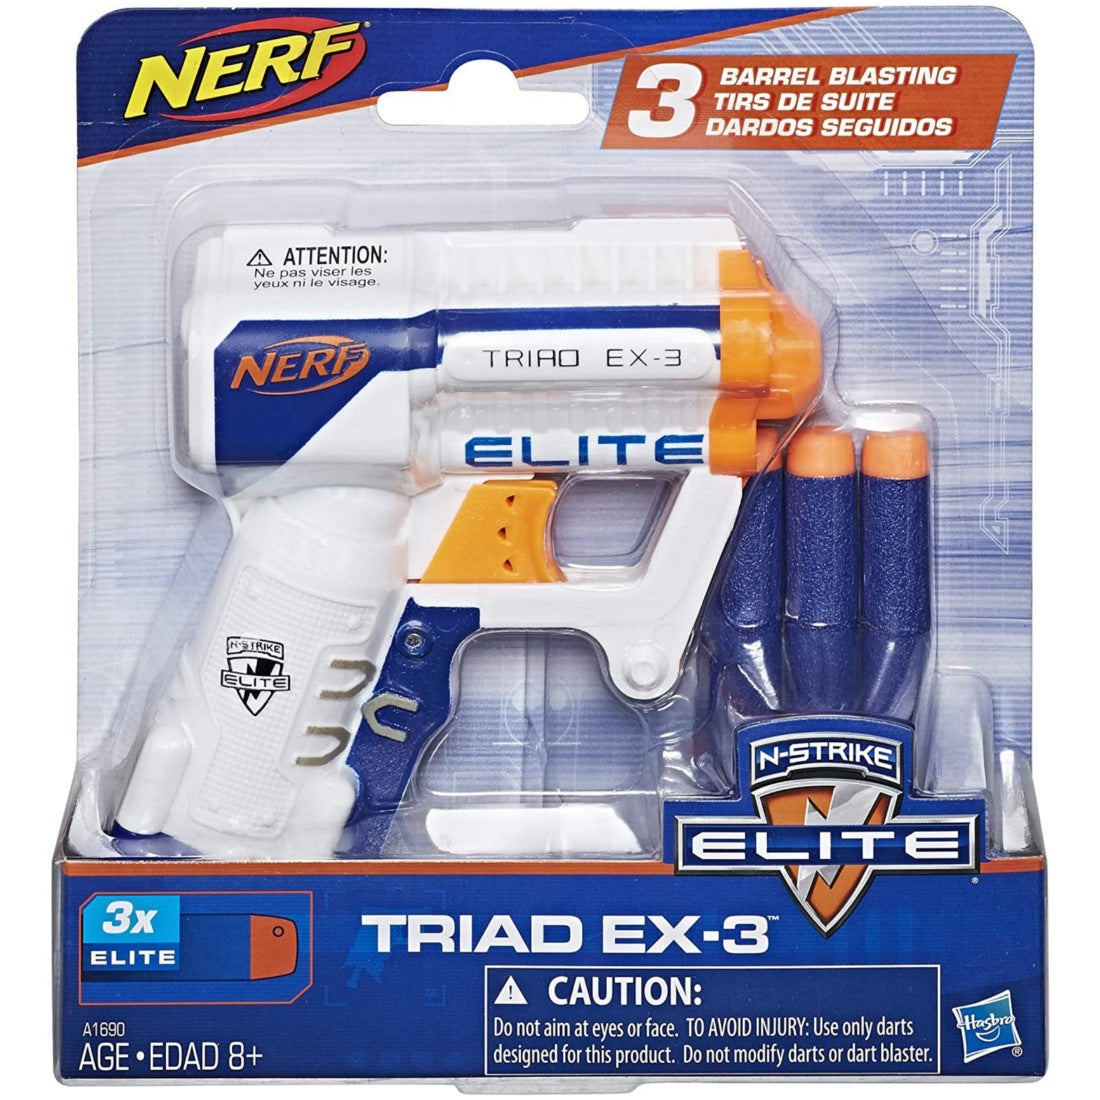 N-Strike Triad EX-3 NERF Hasbro, 3 Elite Darts 8+ Years Kids Toy